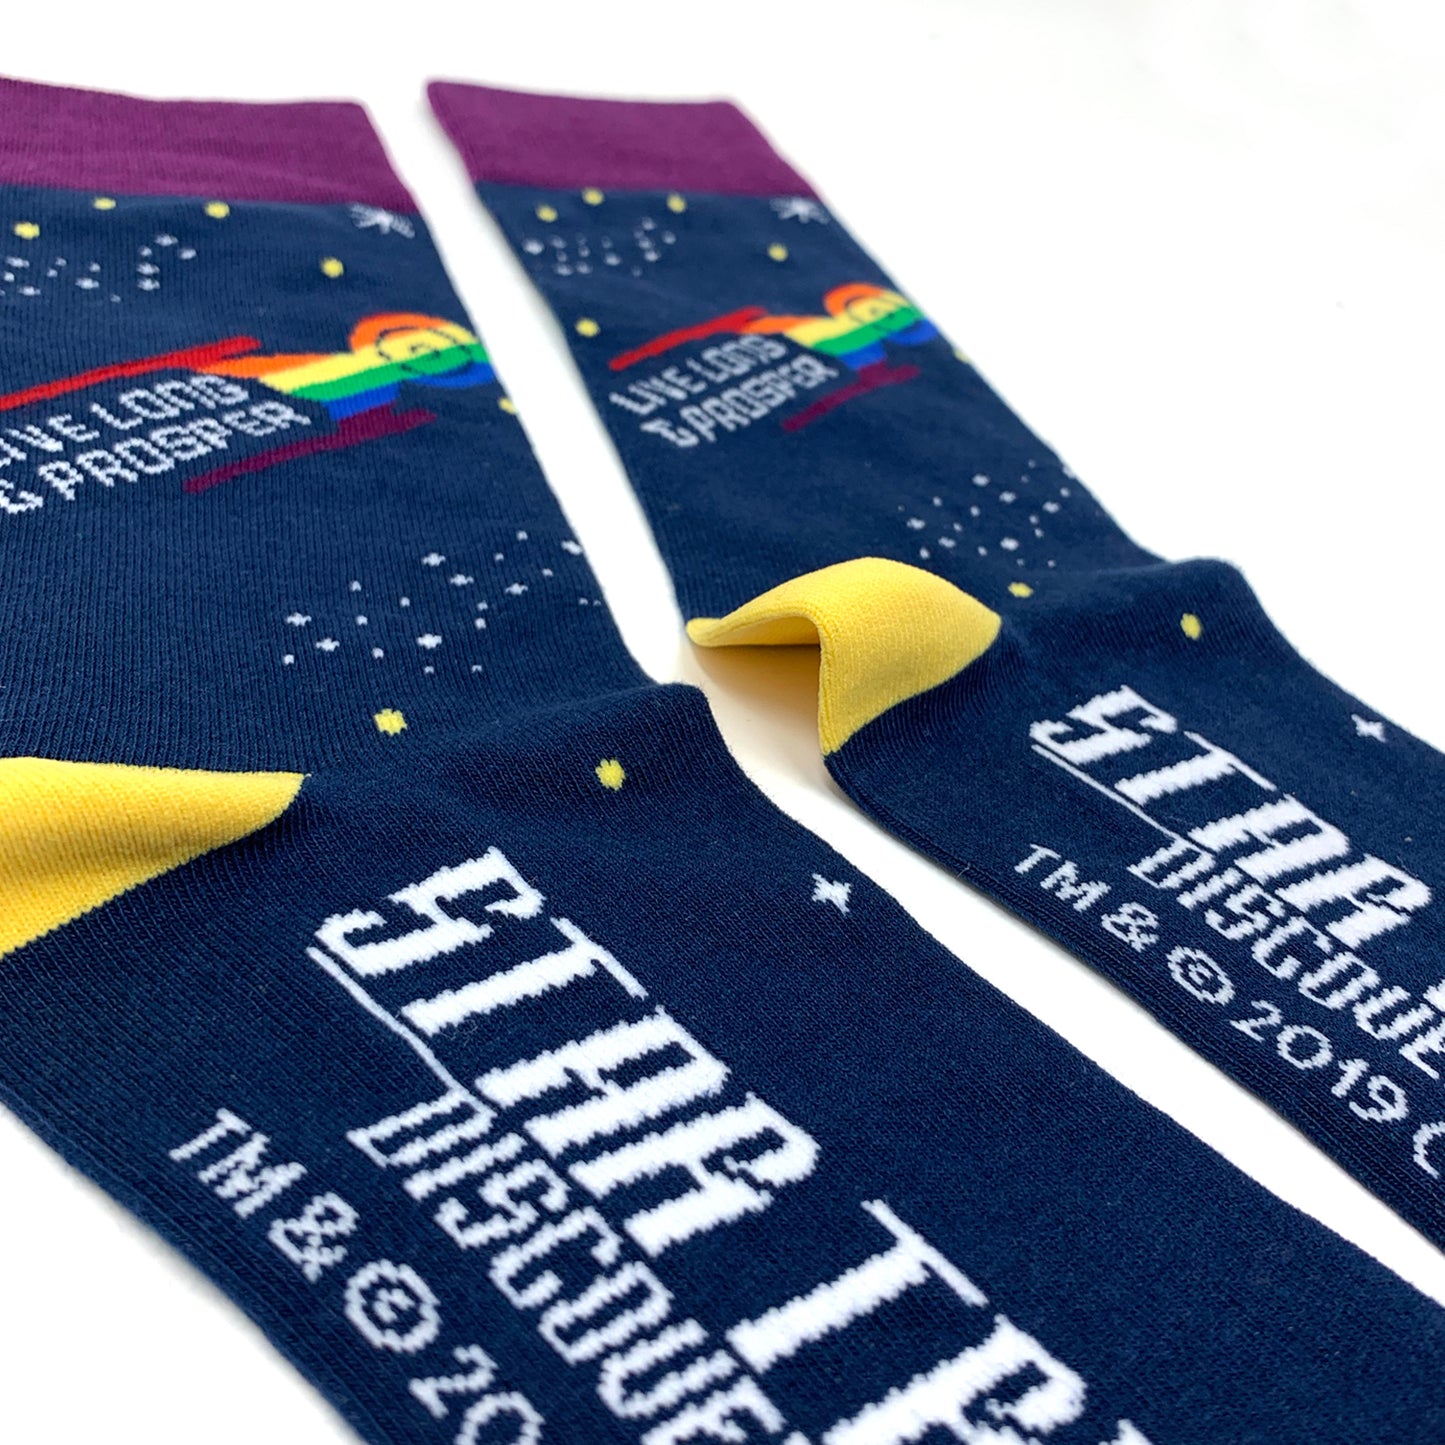 Star Trek: Discovery Pride Sock